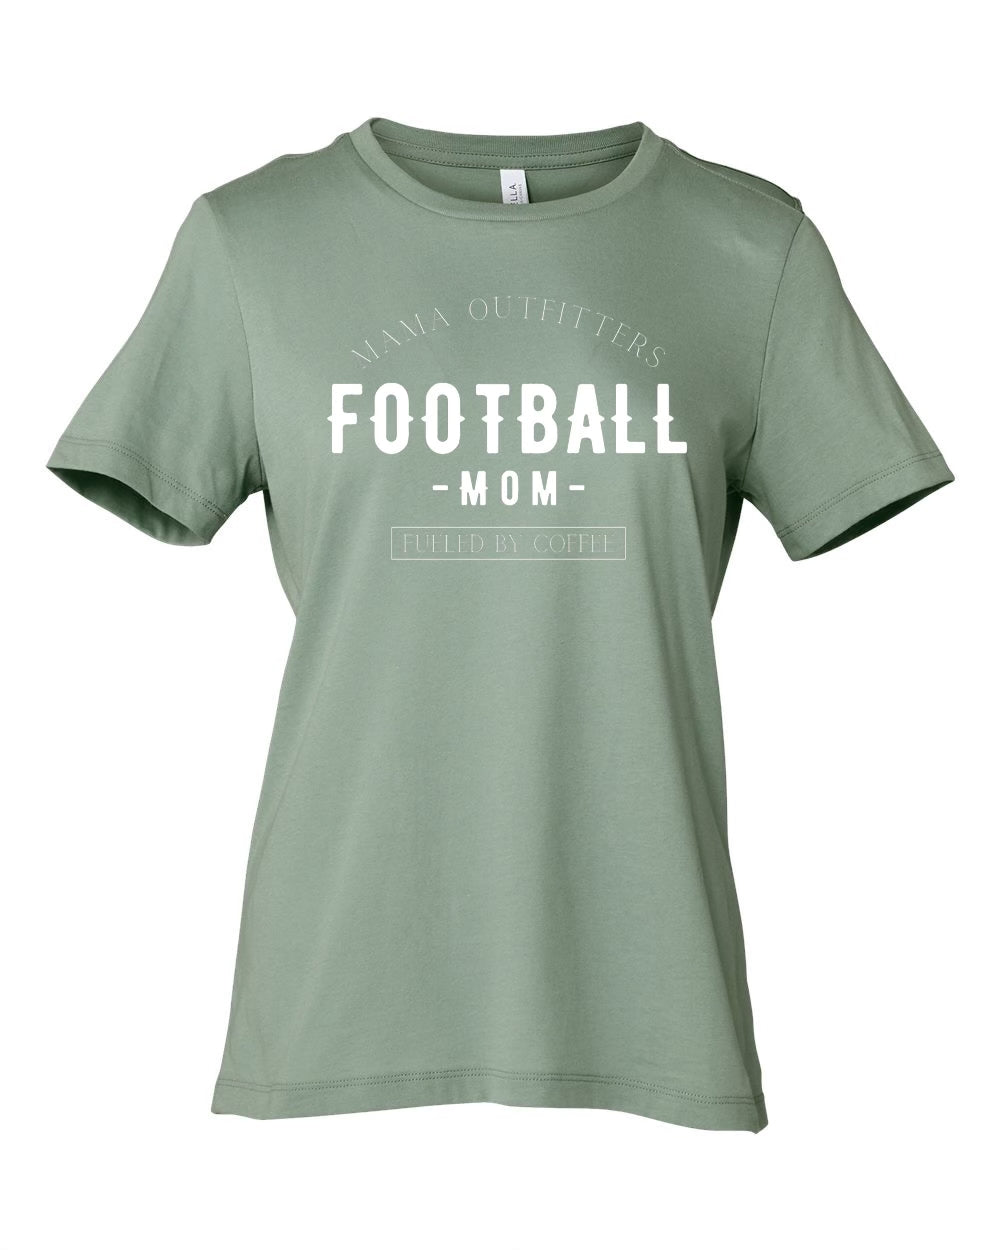 Football Mom Shirt